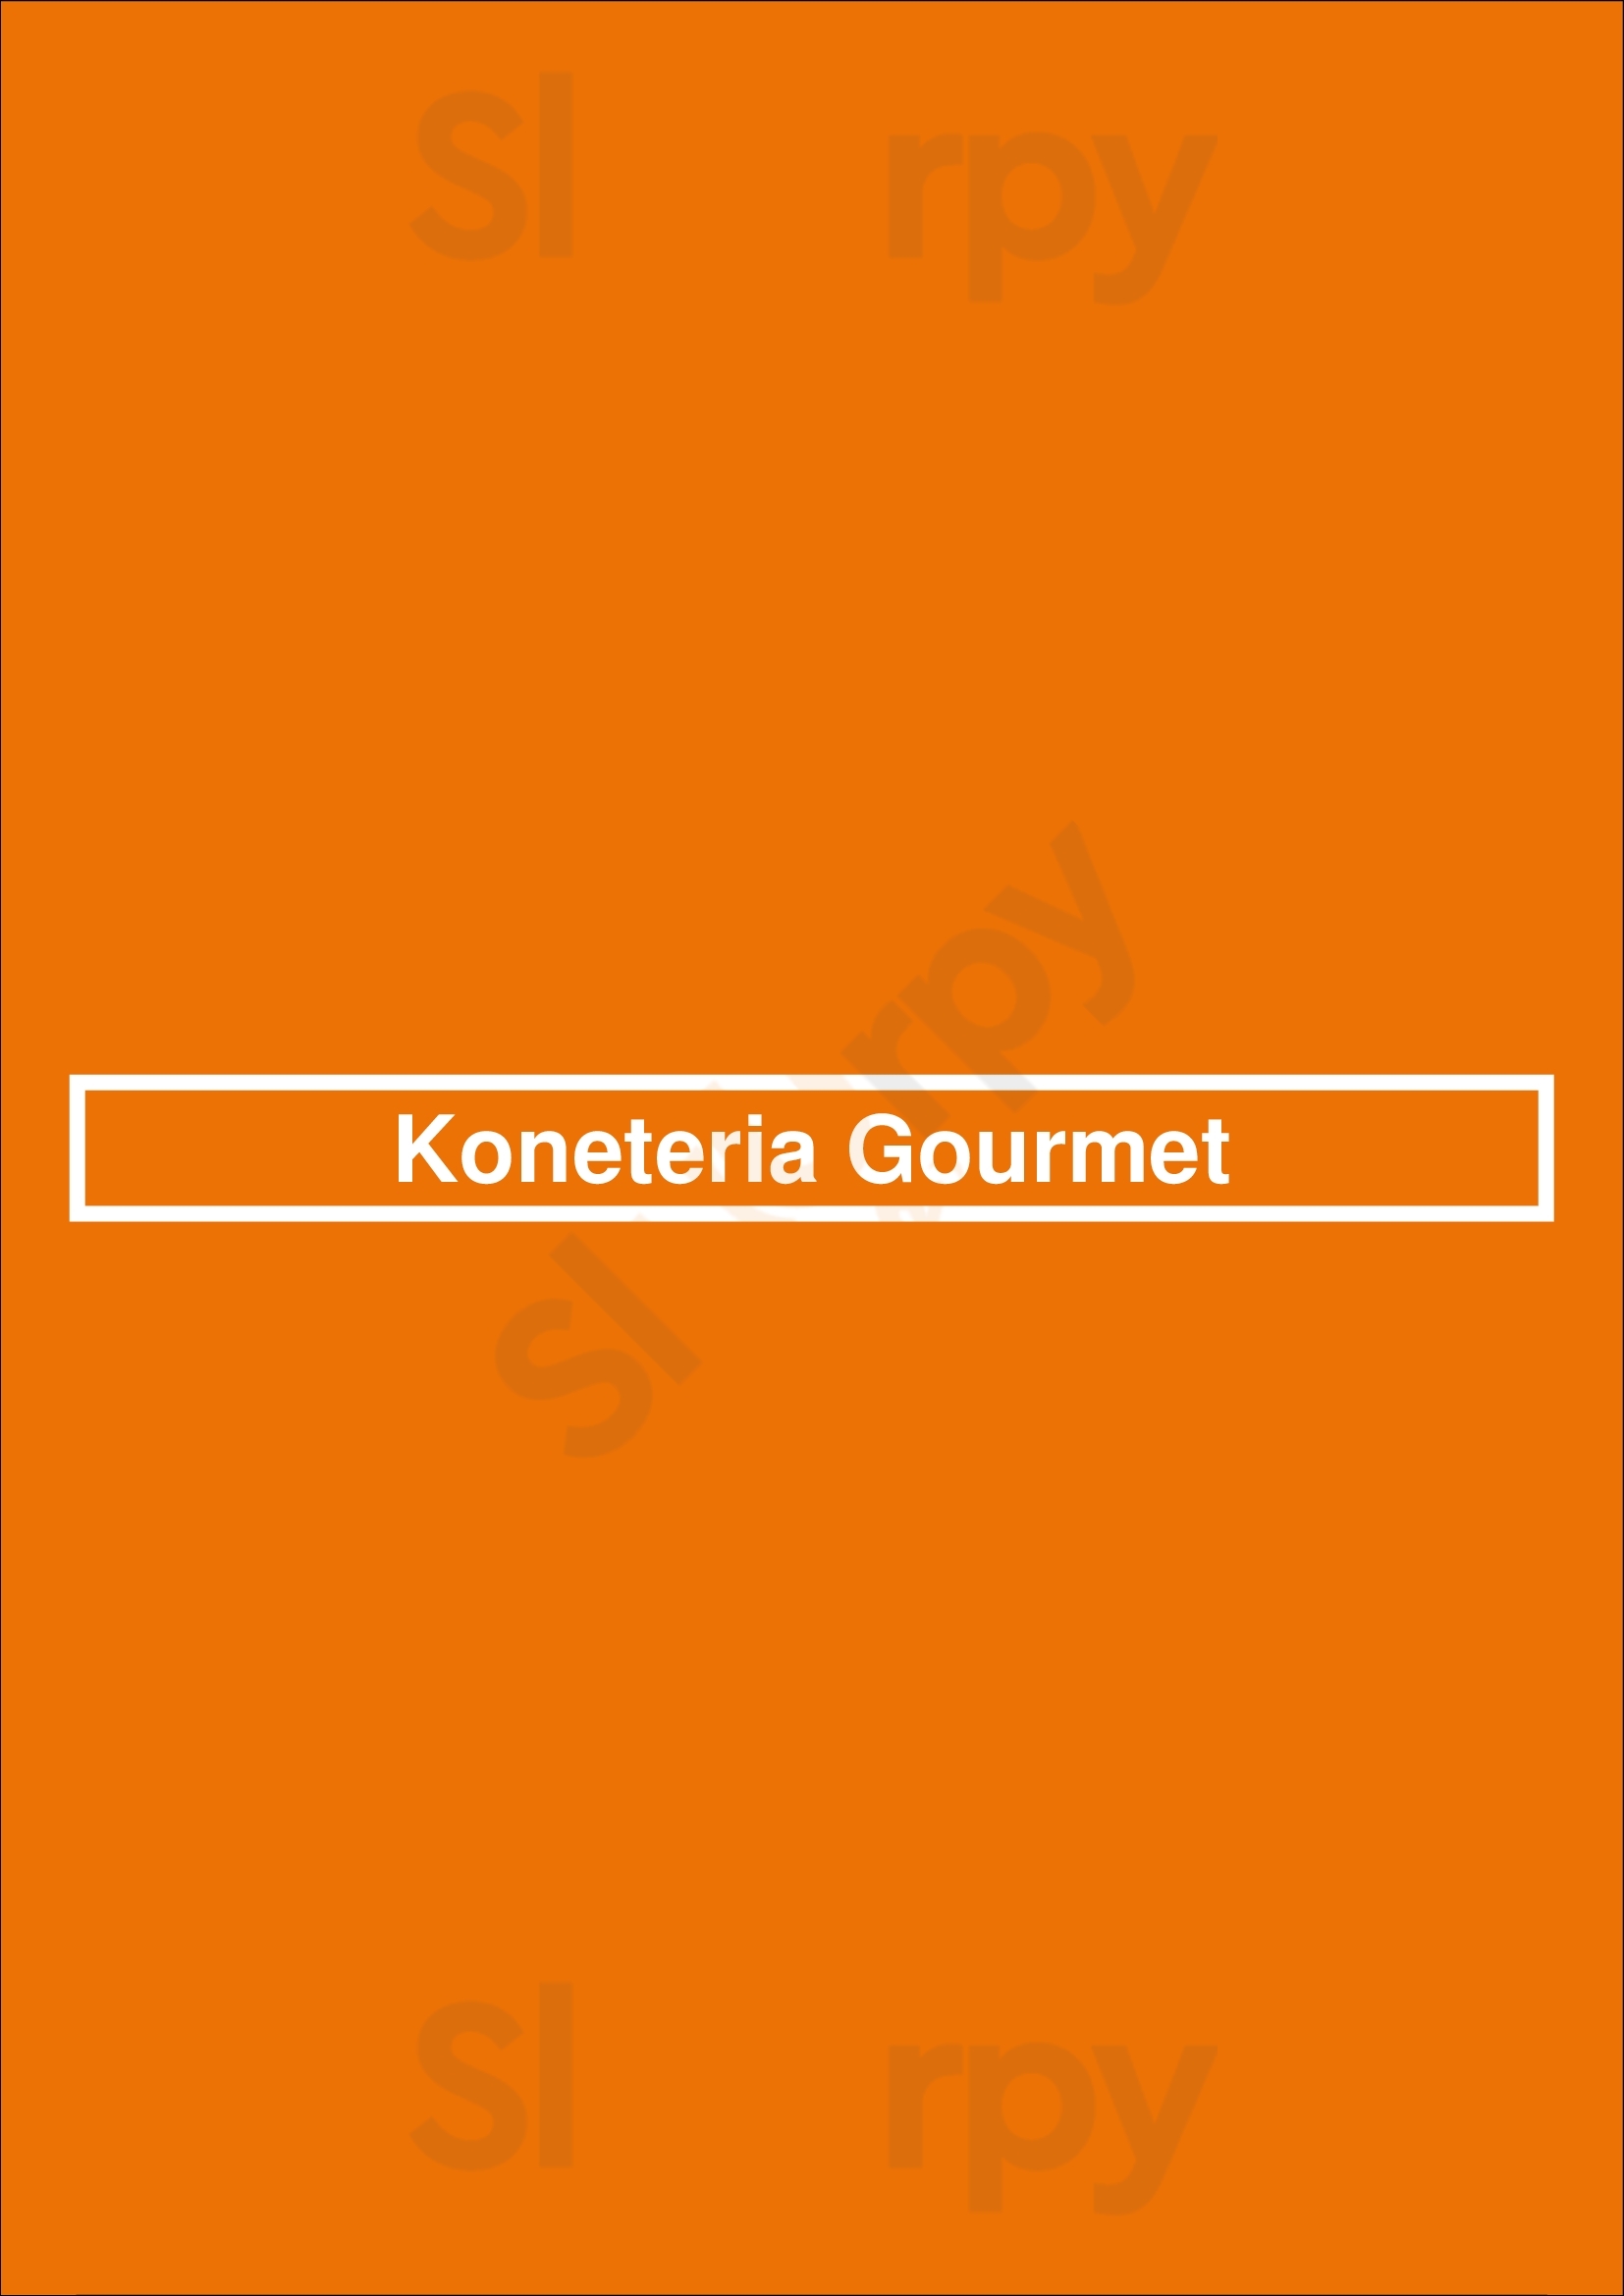 Koneteria Gourmet Belo Horizonte Menu - 1